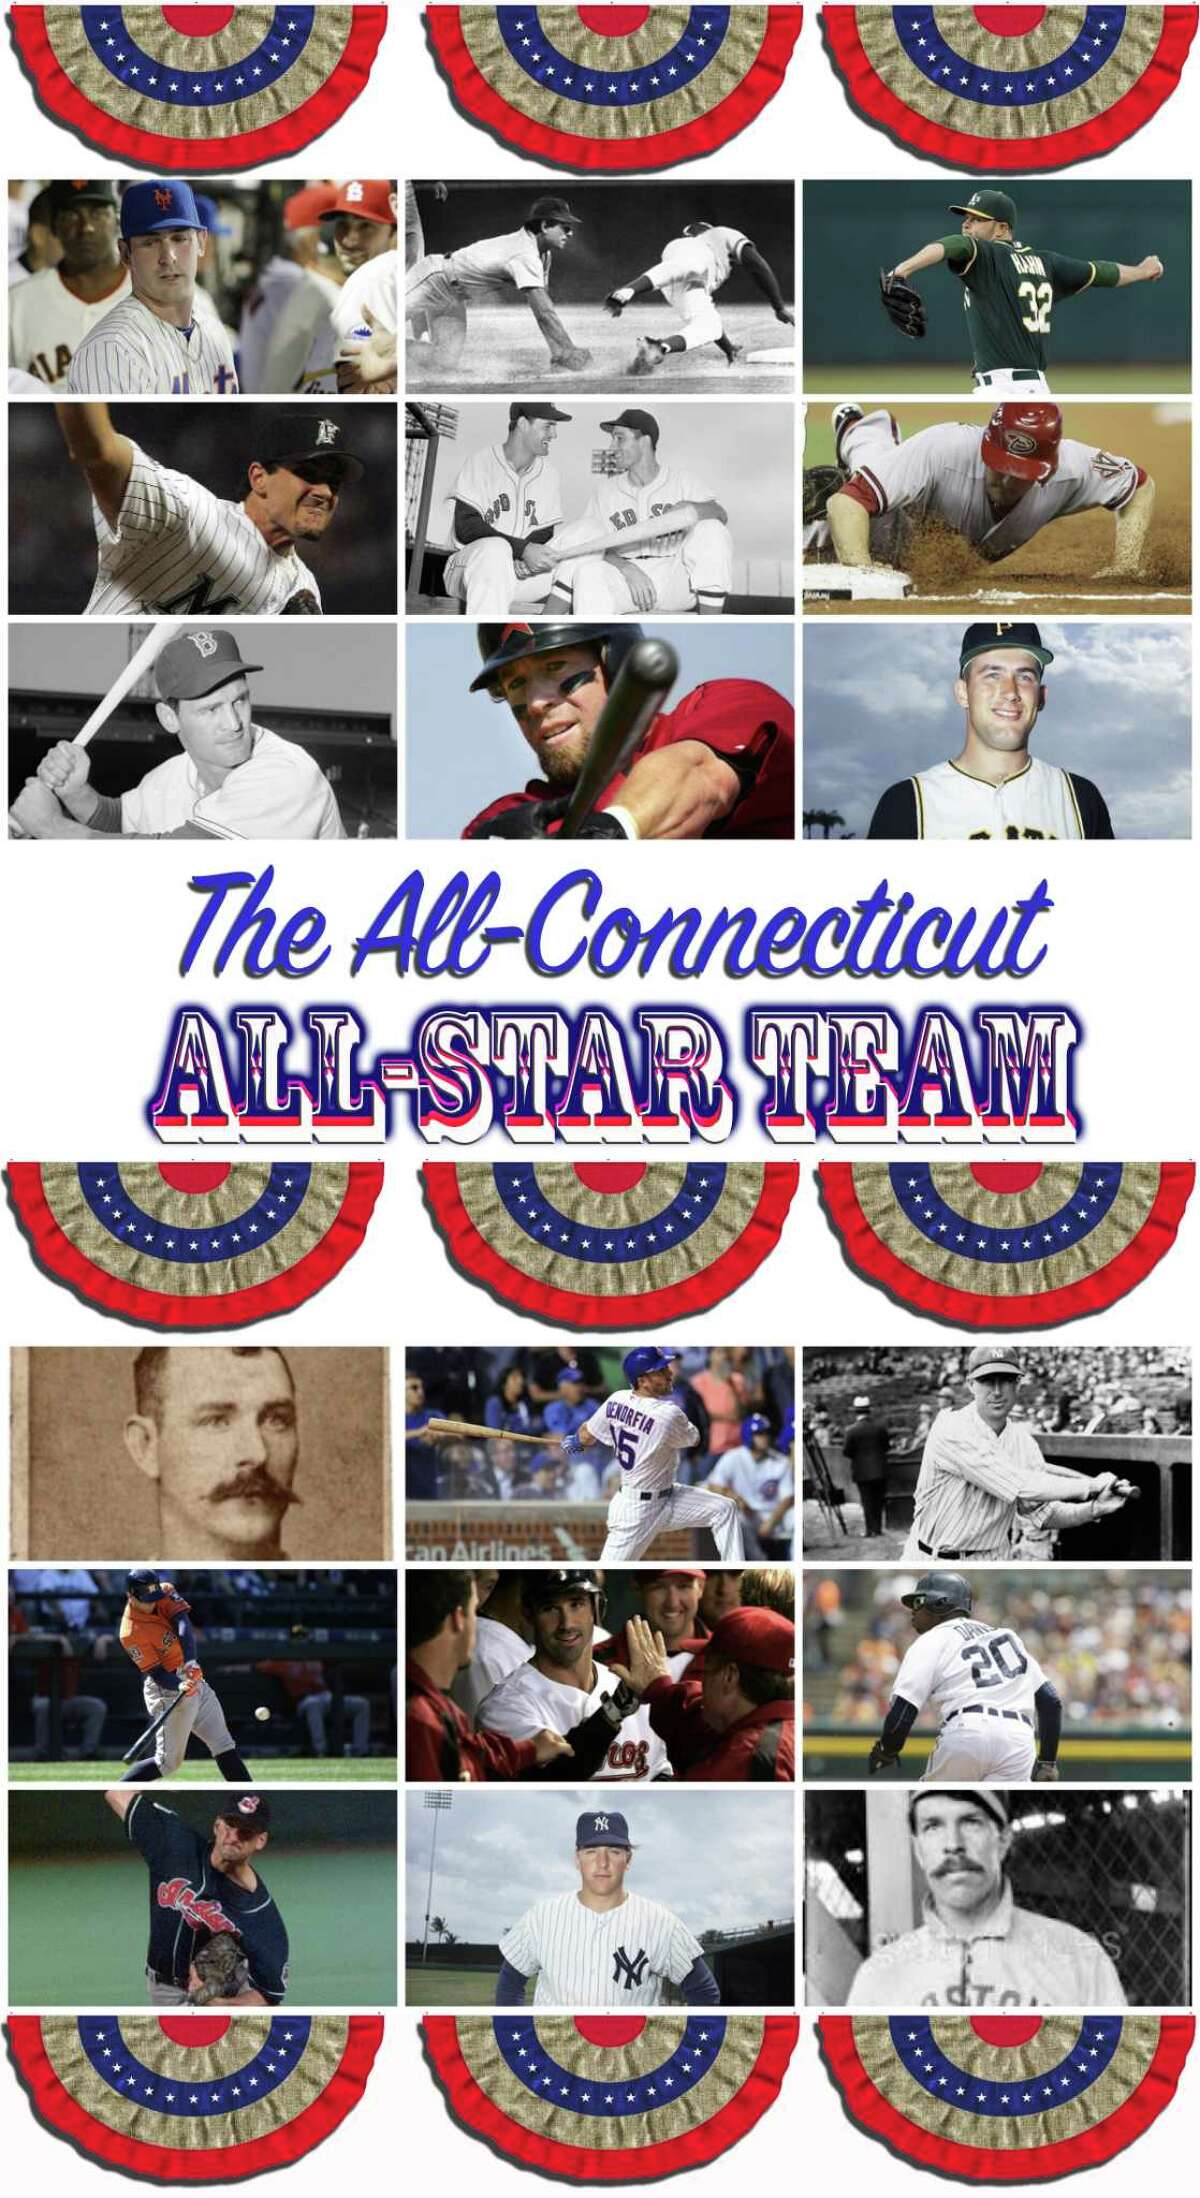 2001 Major League Baseball All-Star Game - Wikipedia